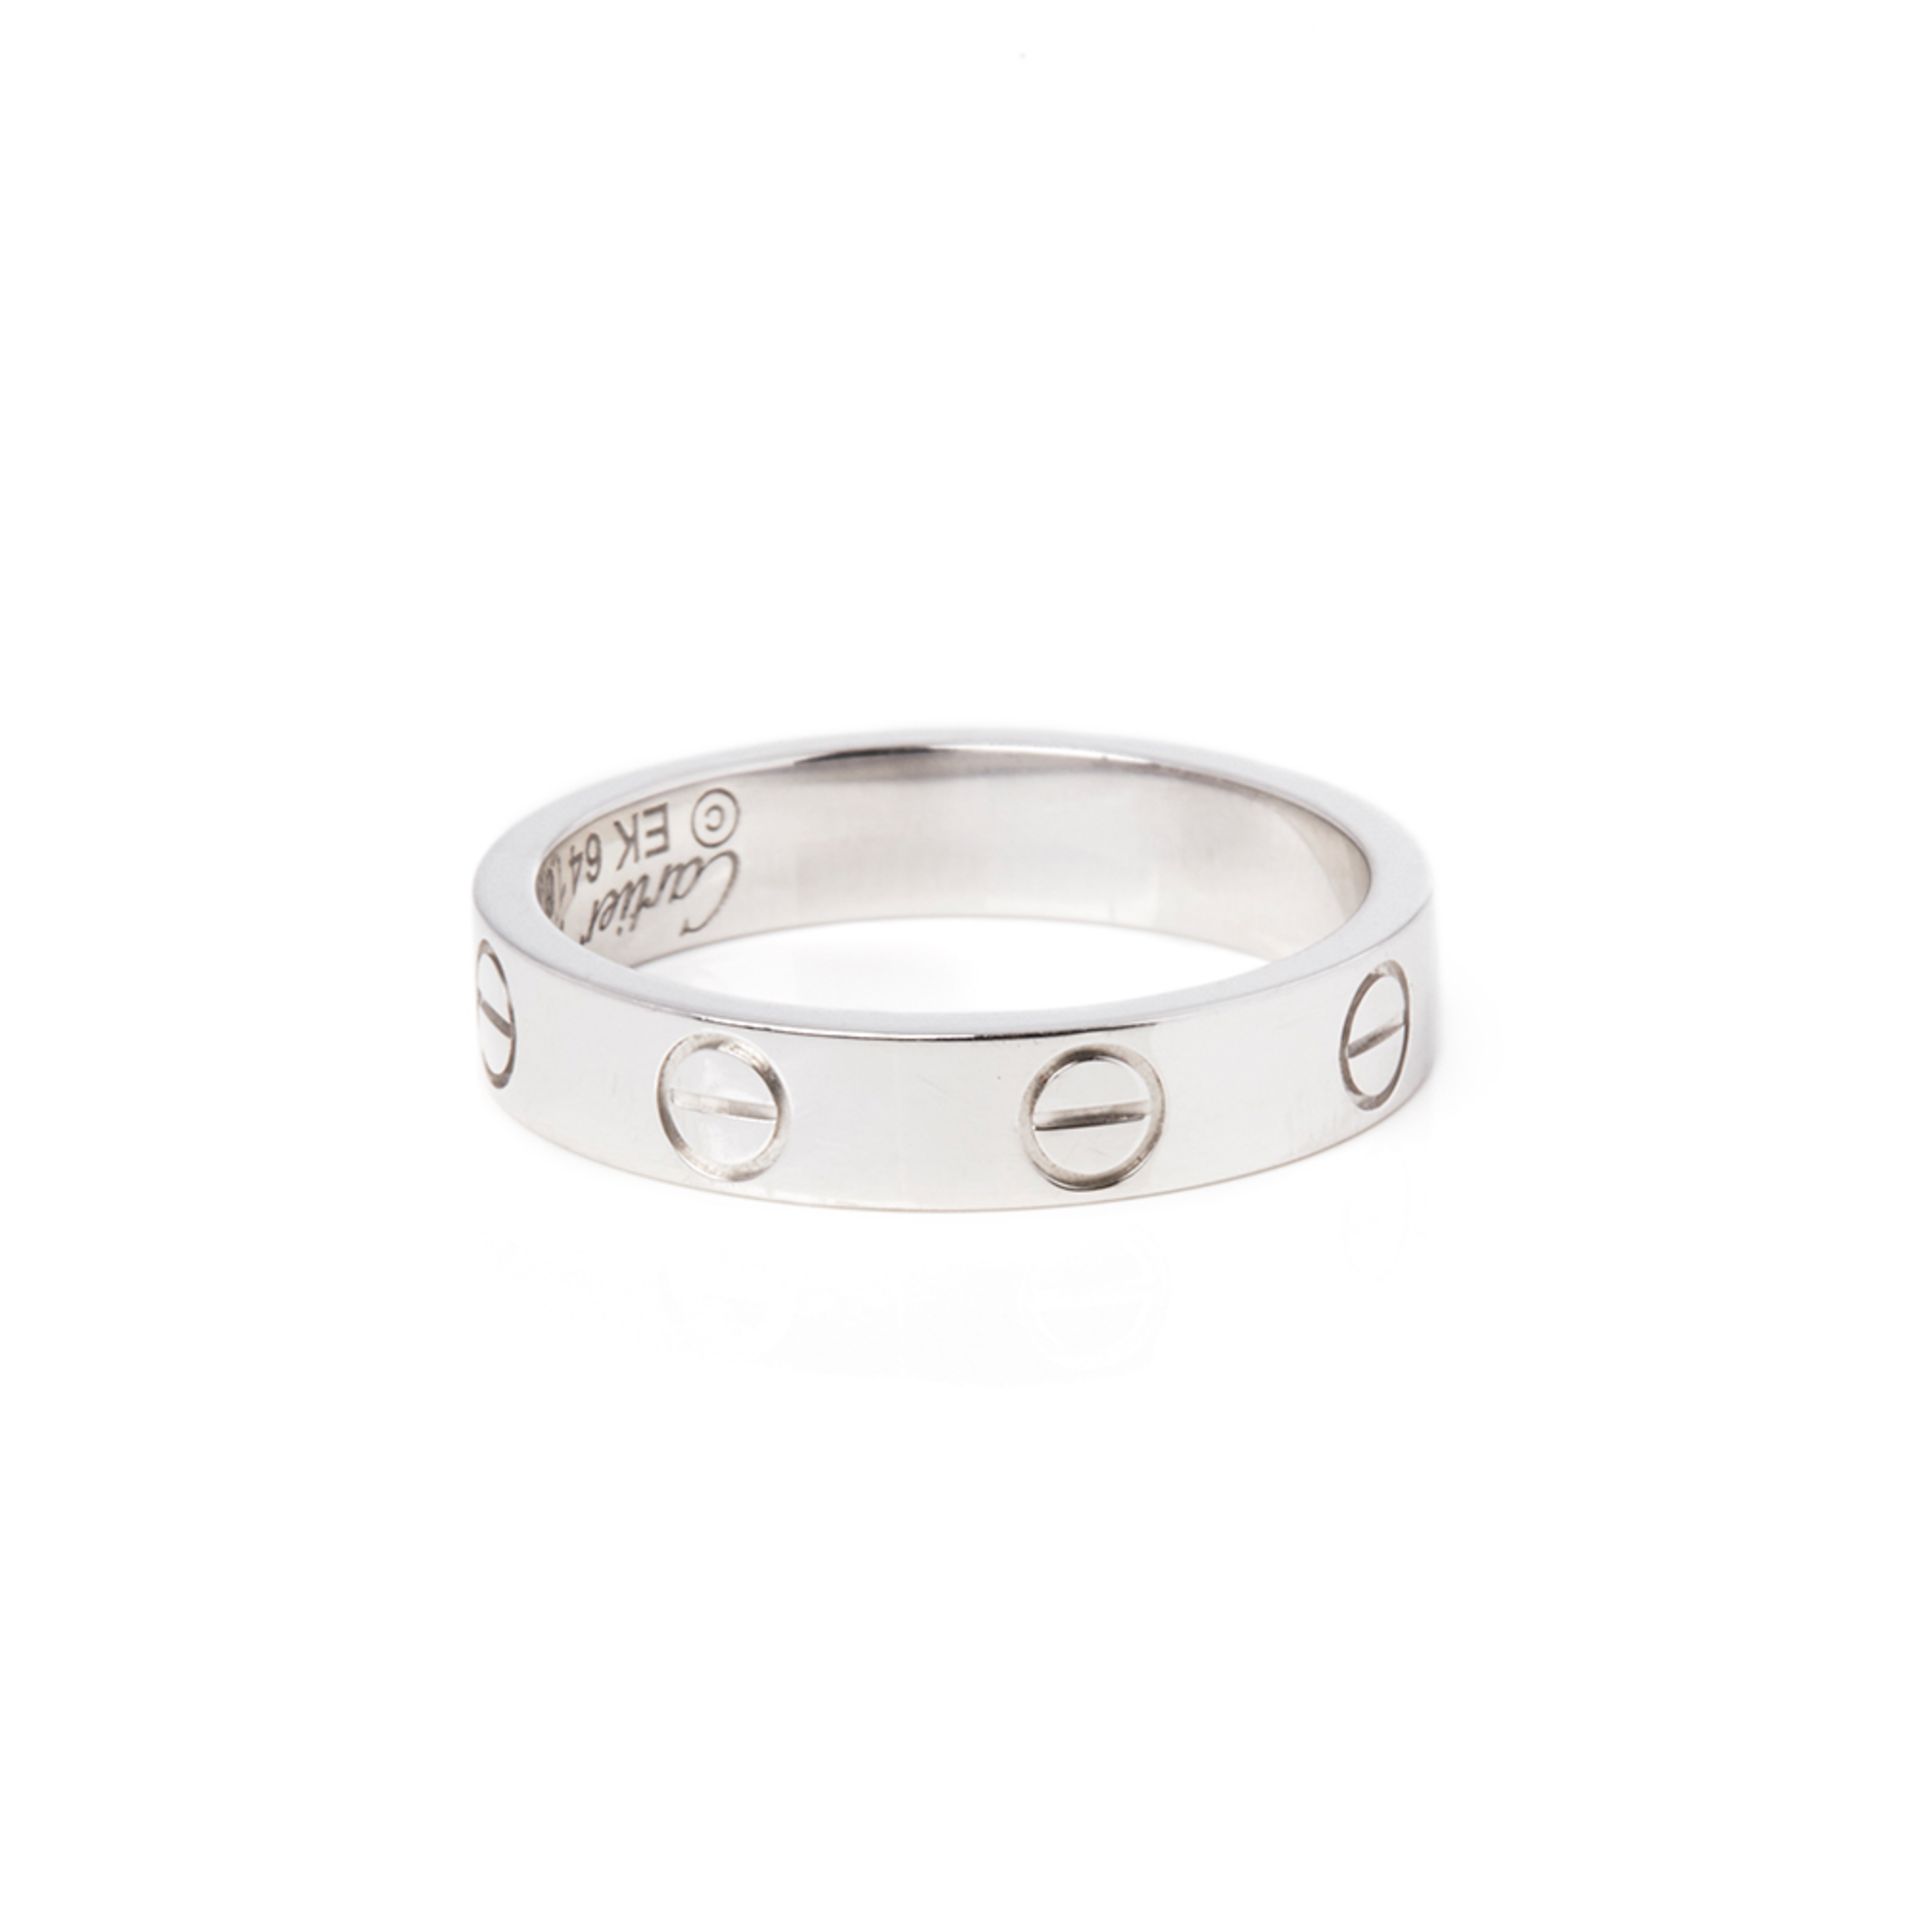 Cartier 18k White Gold Mini Love Ring - Image 3 of 7